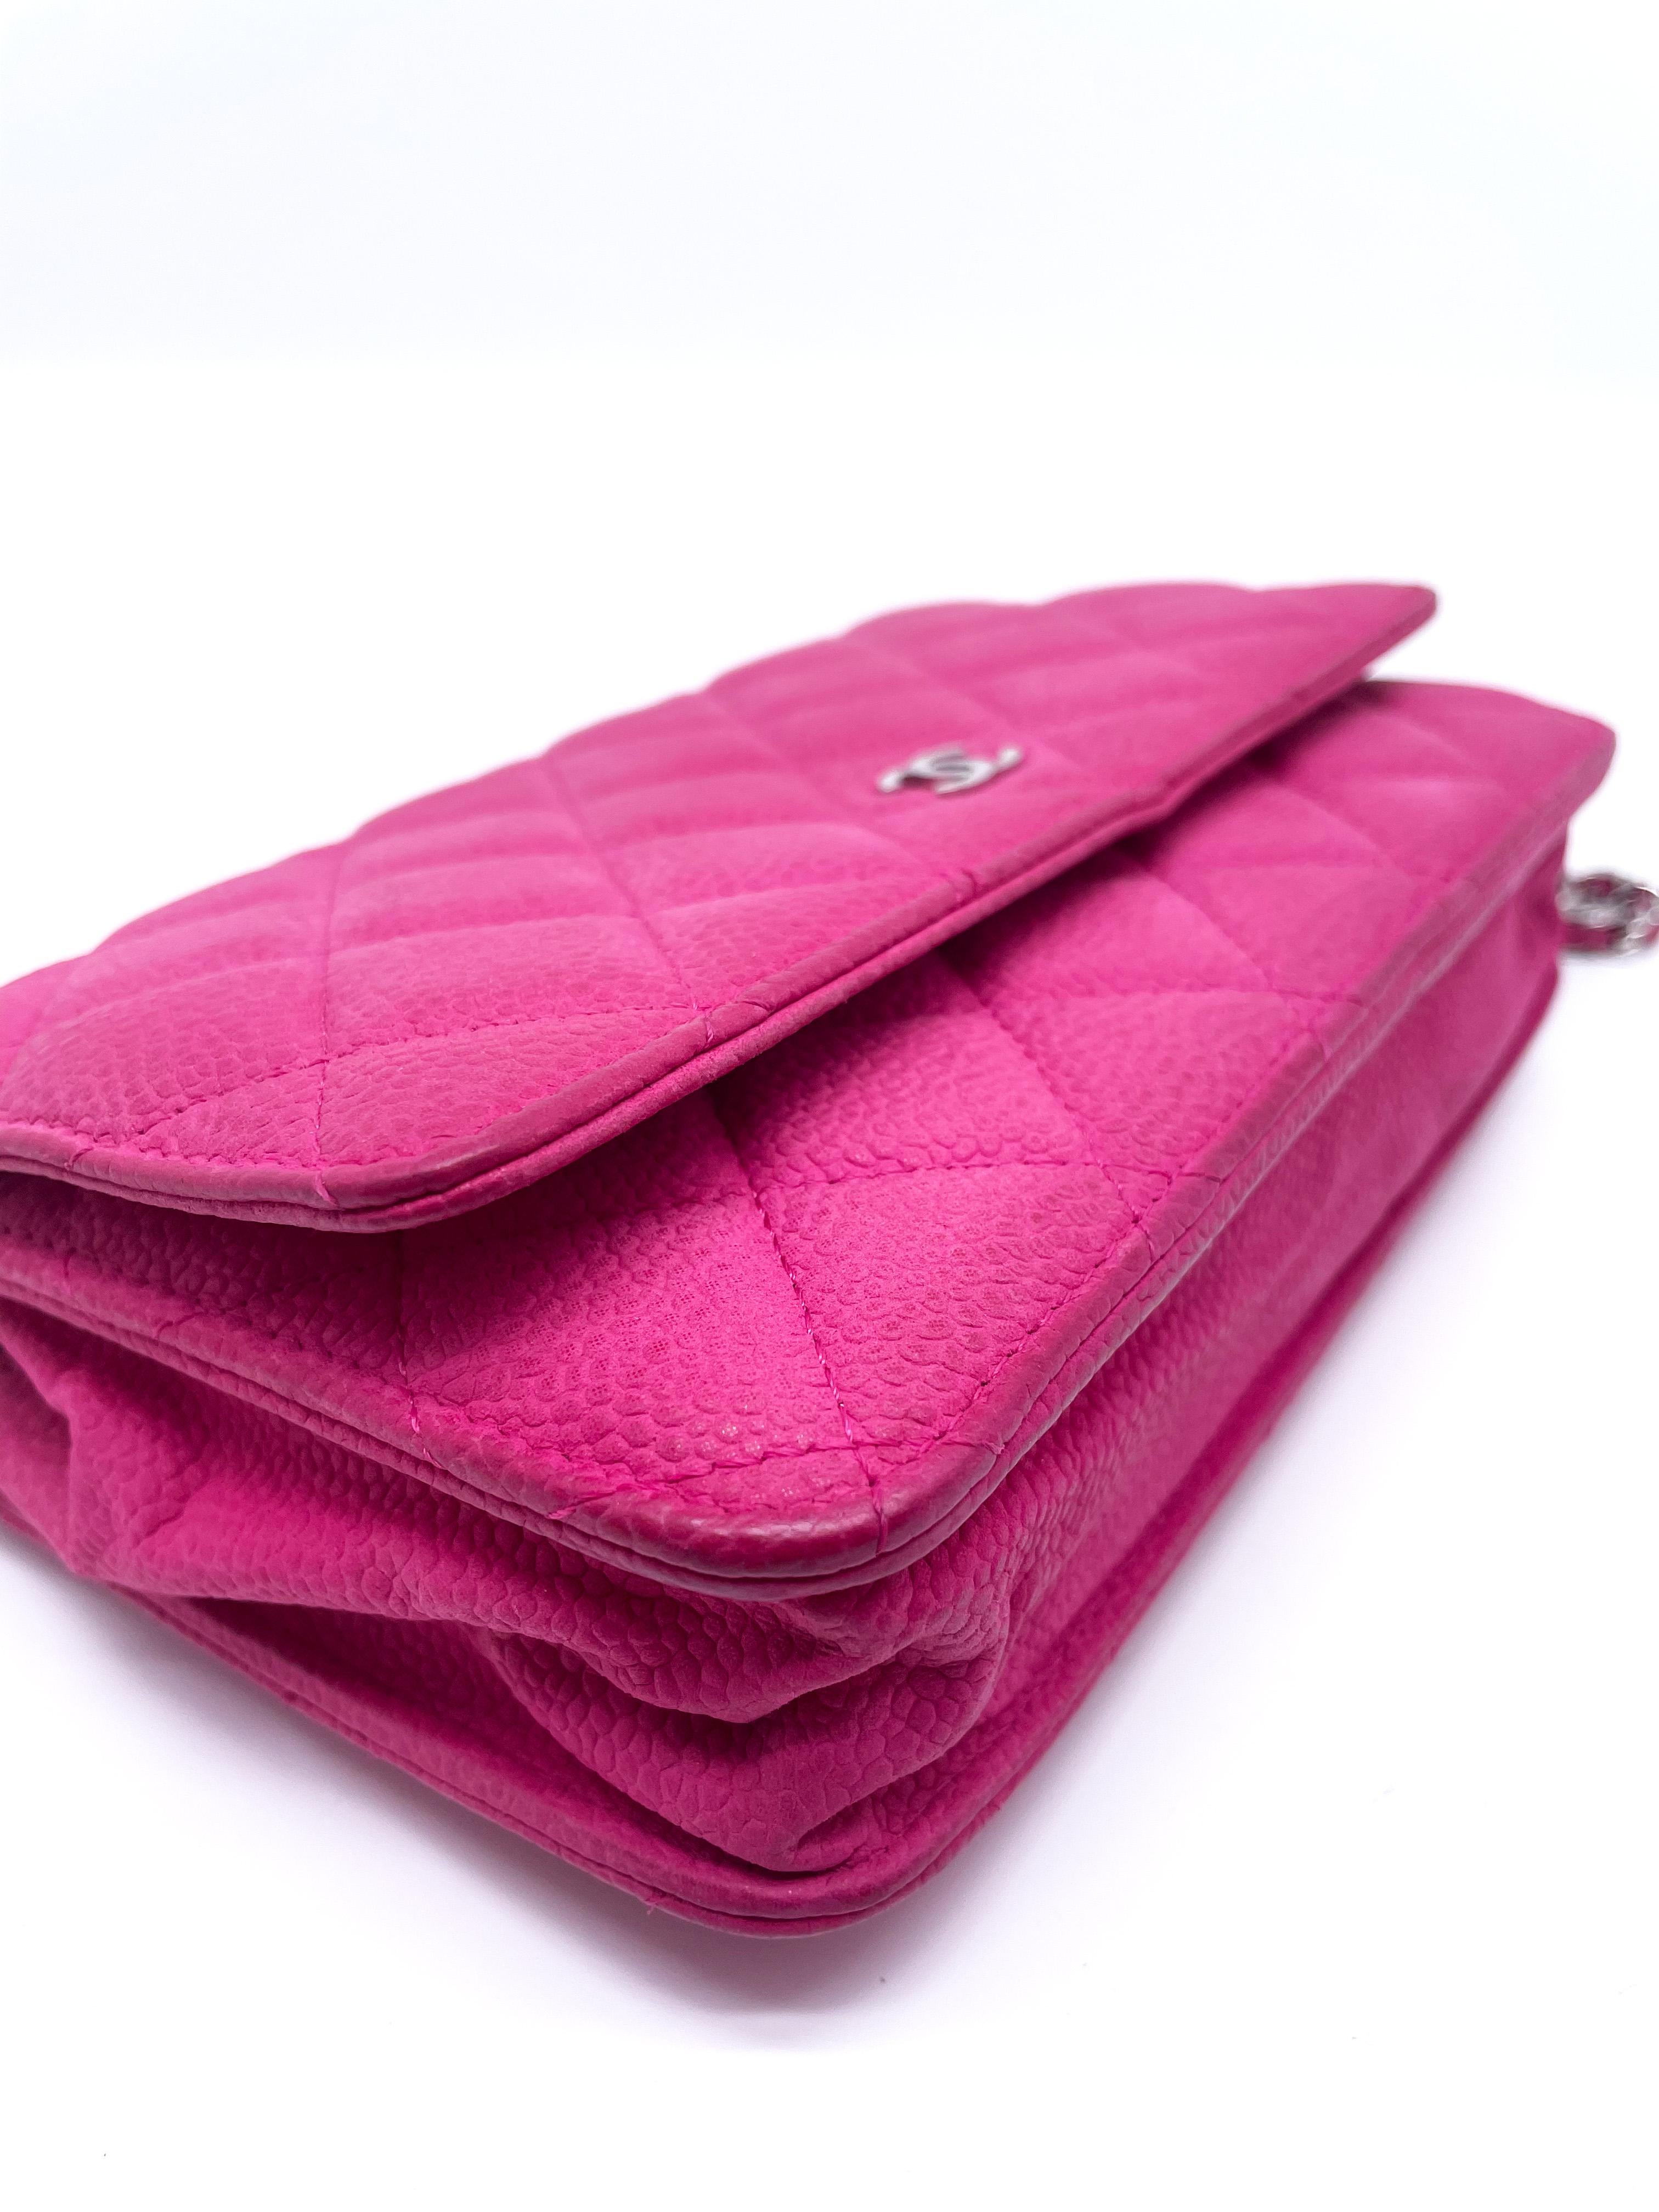 Chanel Wallet on Chain Handbag Pink Caviar Leather 3